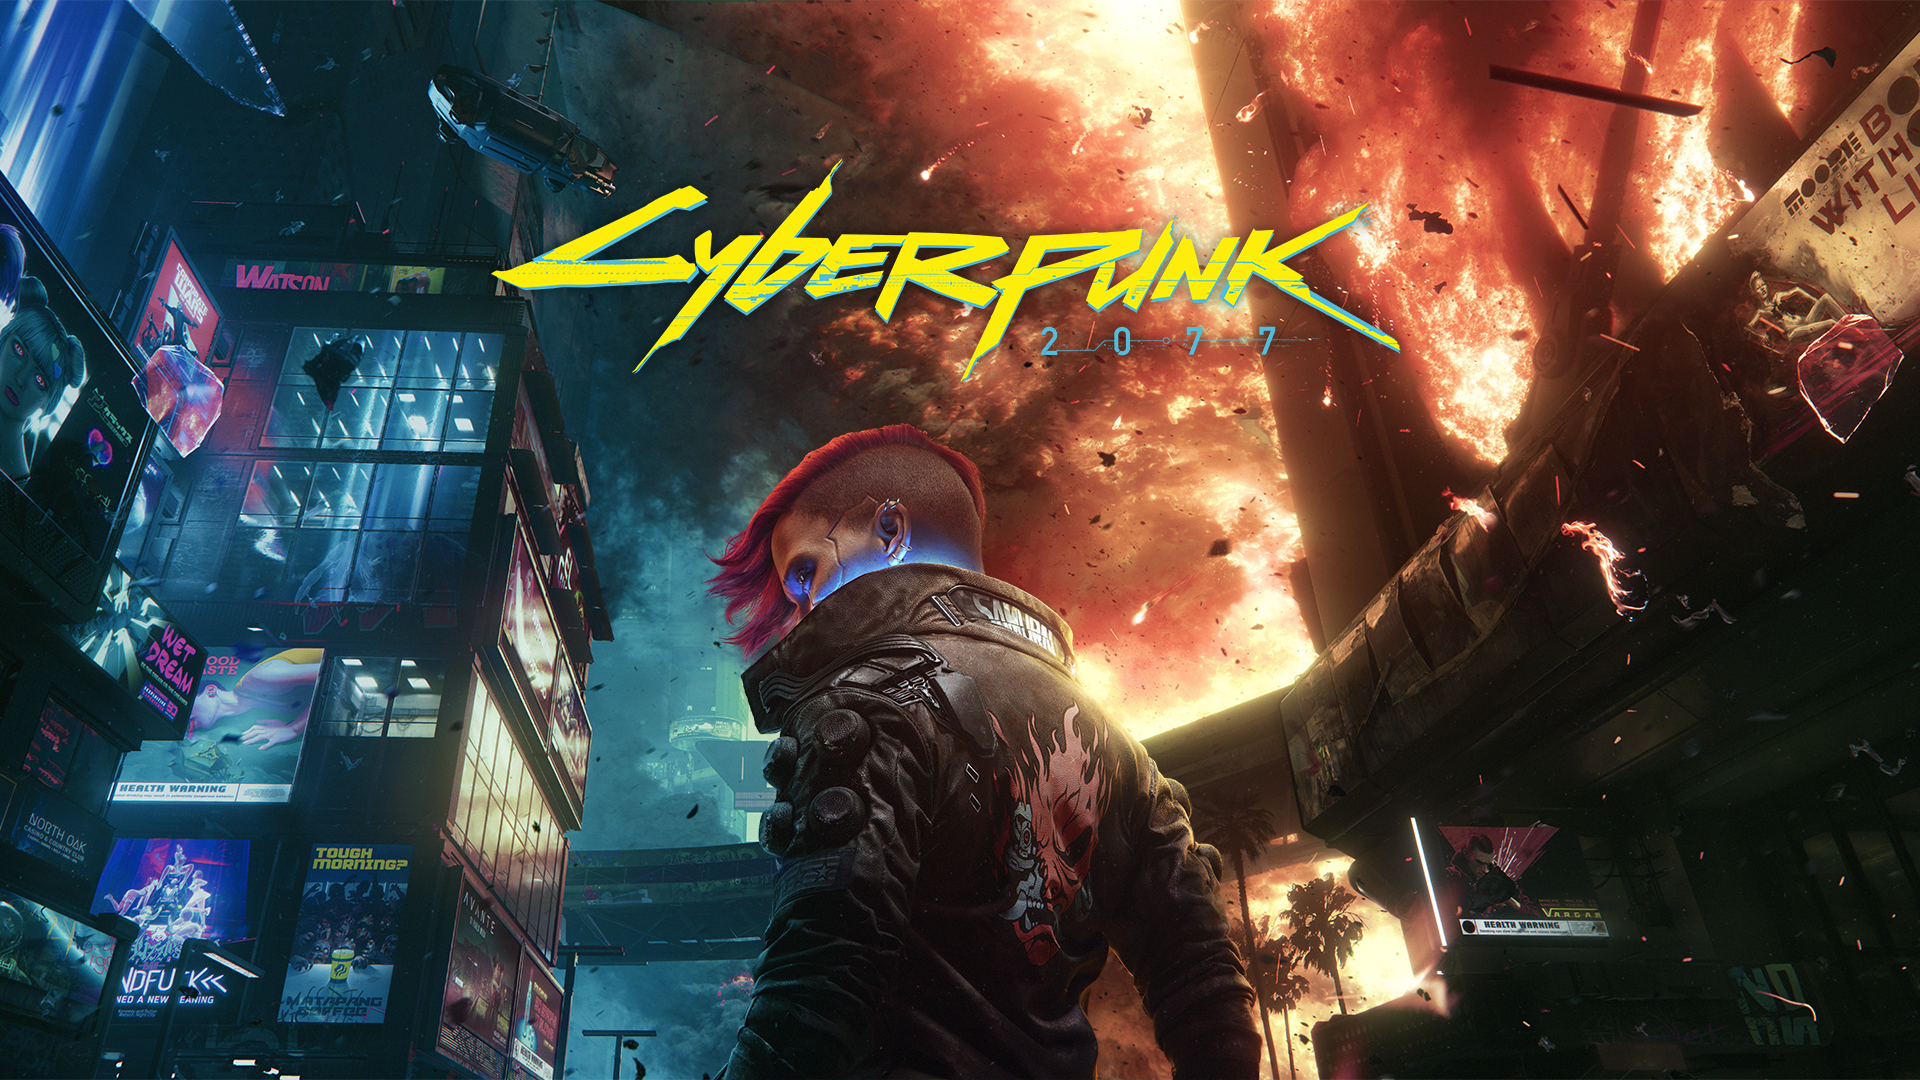 HD wallpaper: Cyberpunk 2077, CD Projekt RED, video games, digital